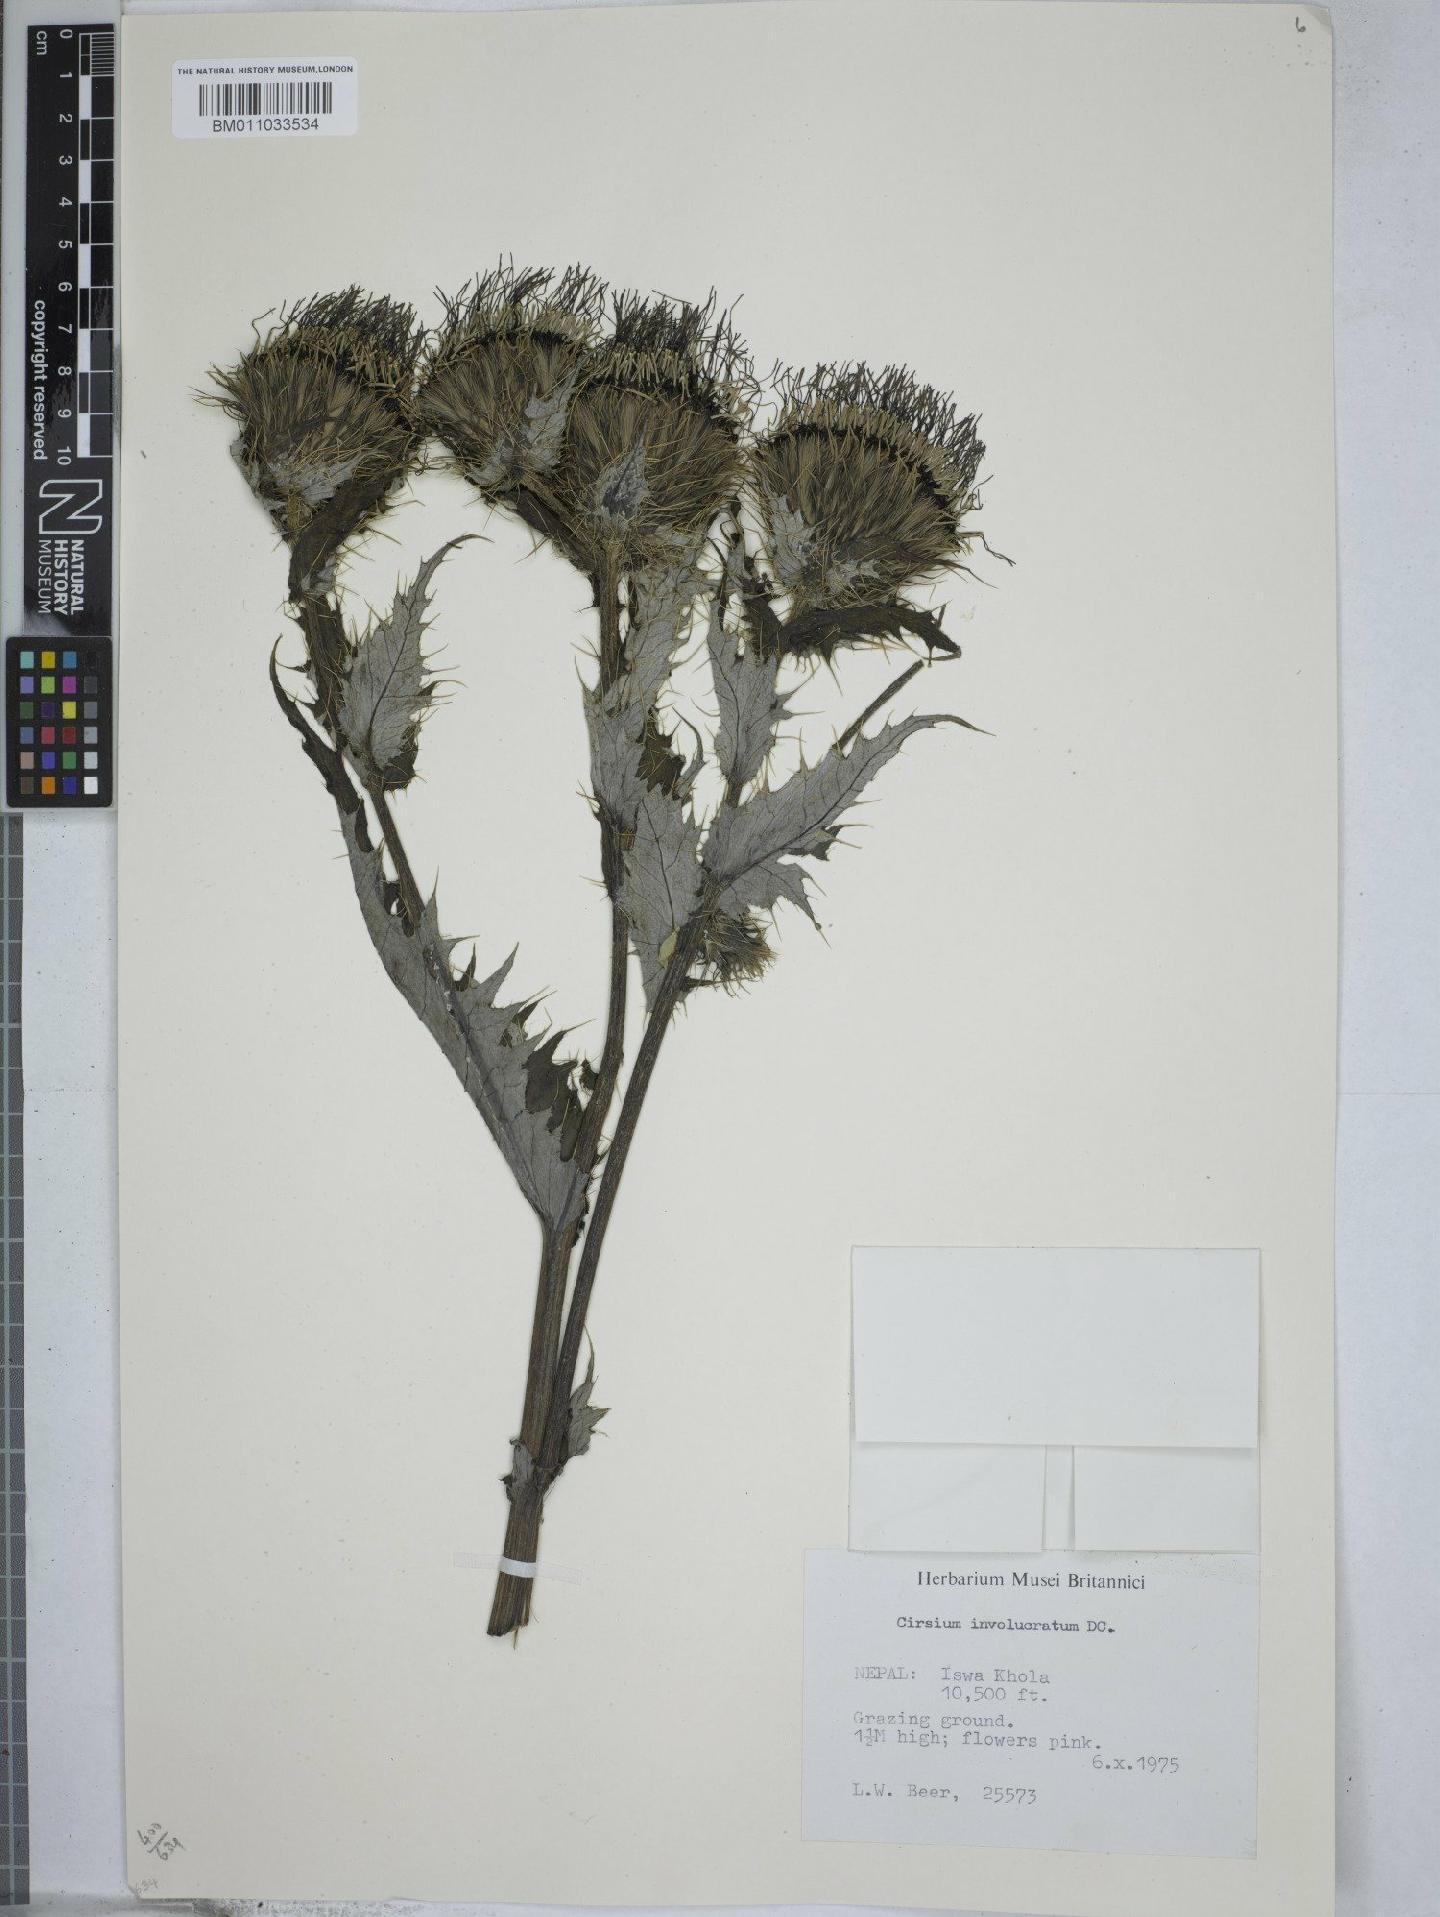 To NHMUK collection (Cirsium flavisquamatum Kitam.; NHMUK:ecatalogue:9157150)